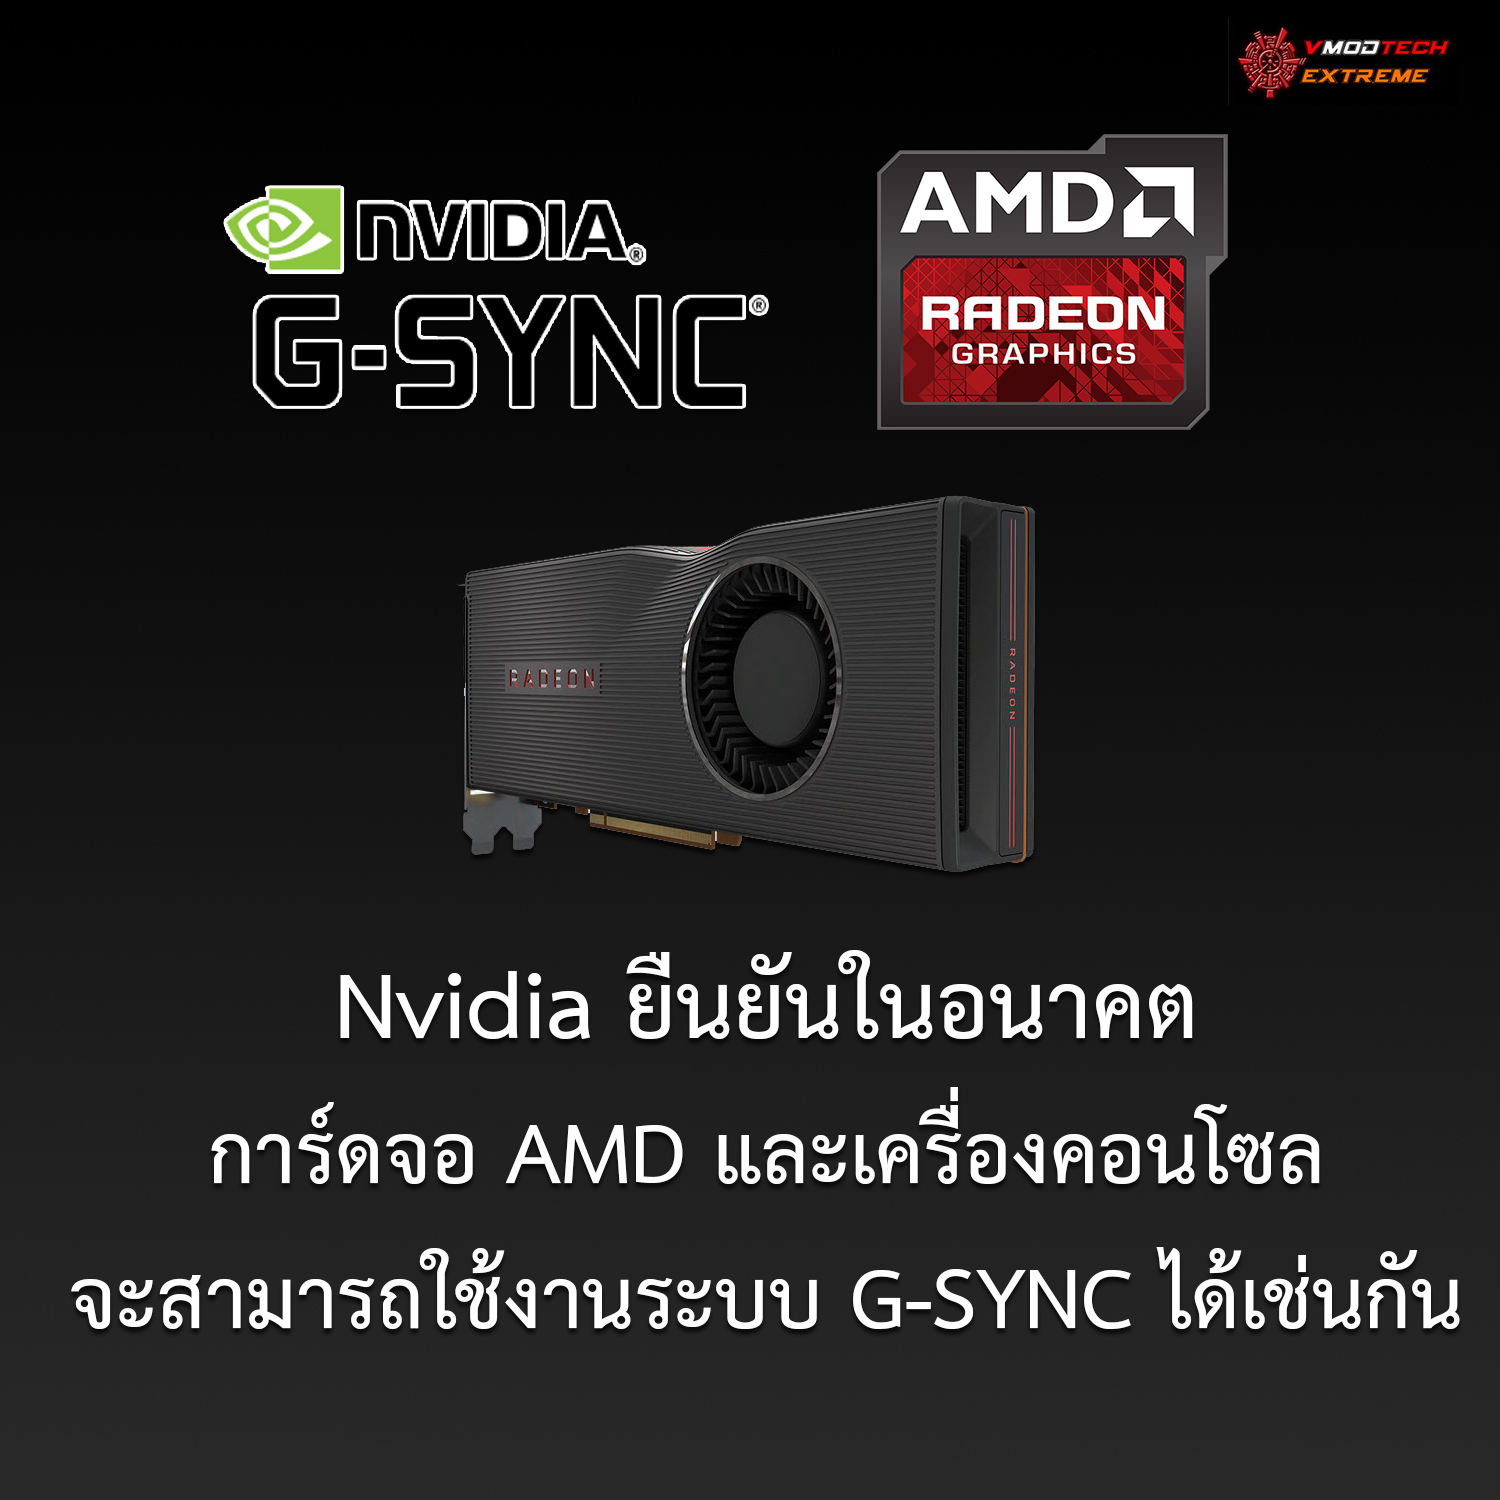 nvidia amd g sync Nvidia ยืนยันในอนาคตการ์ดจอ AMD และเครื่องคอนโซลจะสามารถใช้งานระบบ G SYNC ได้เช่นกัน